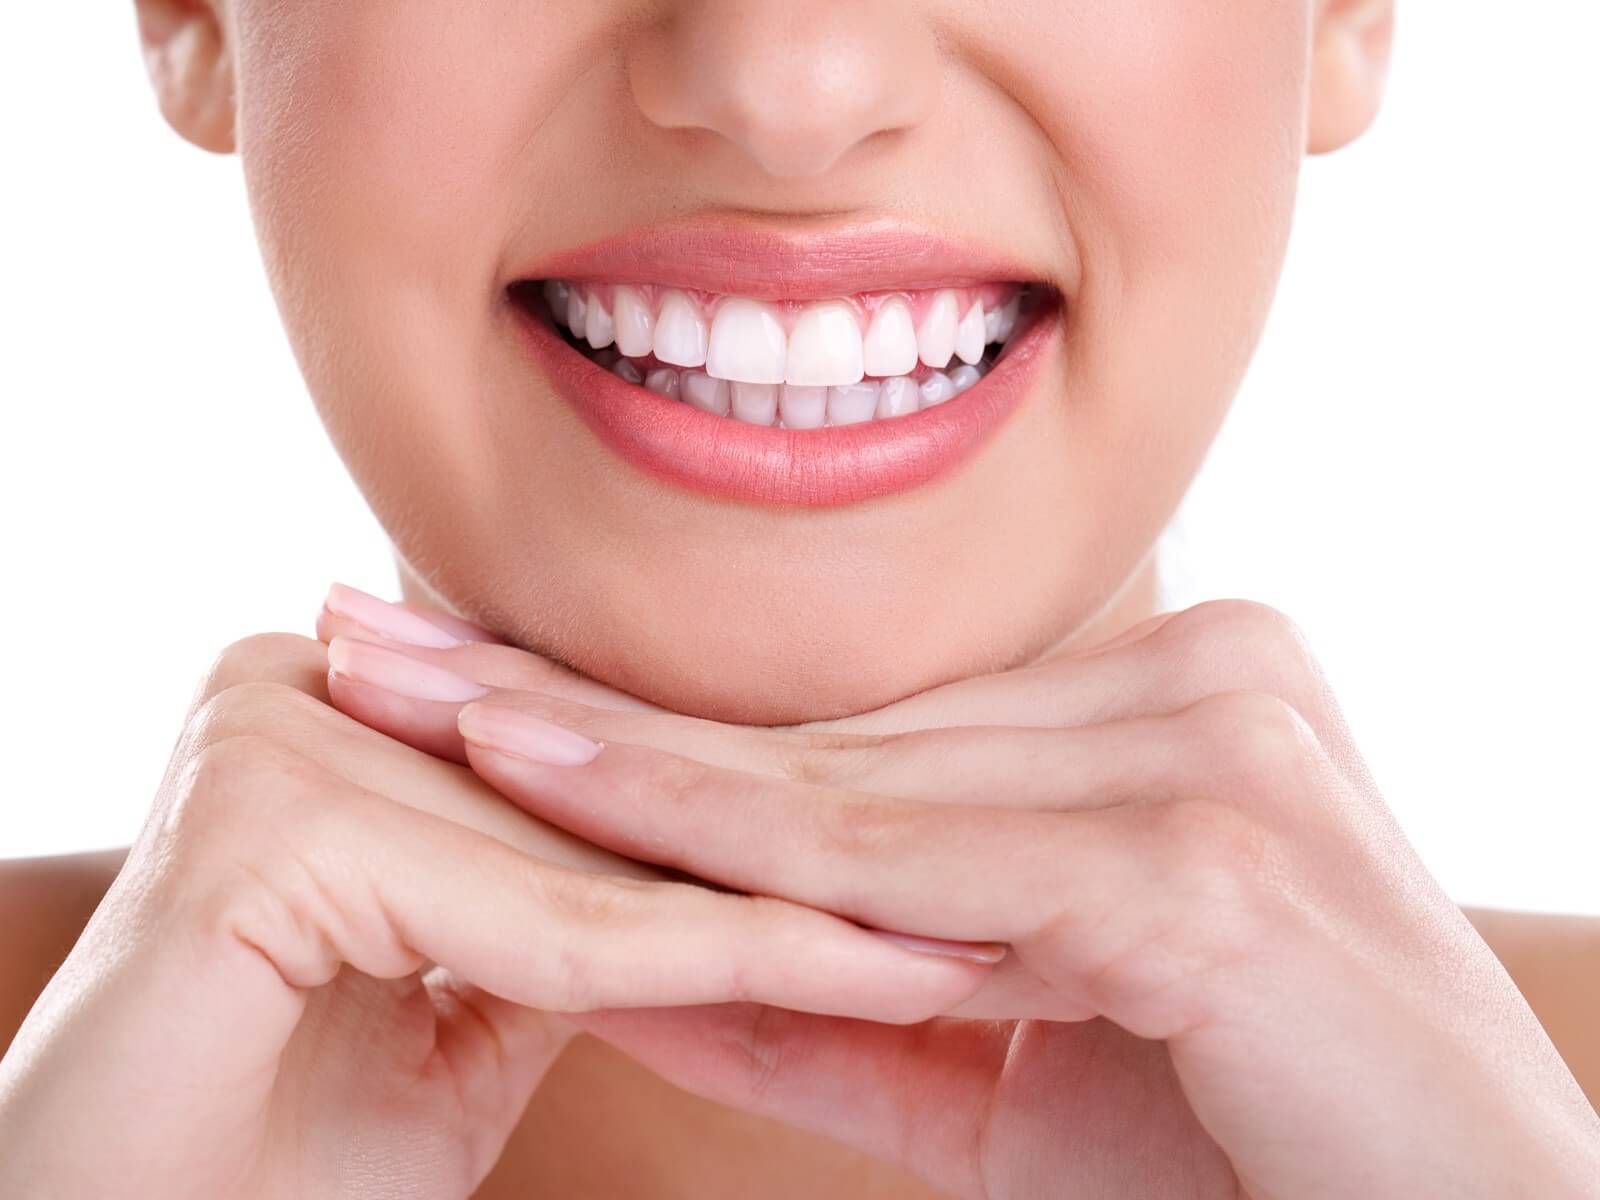 Is laser teeth whitening safe?